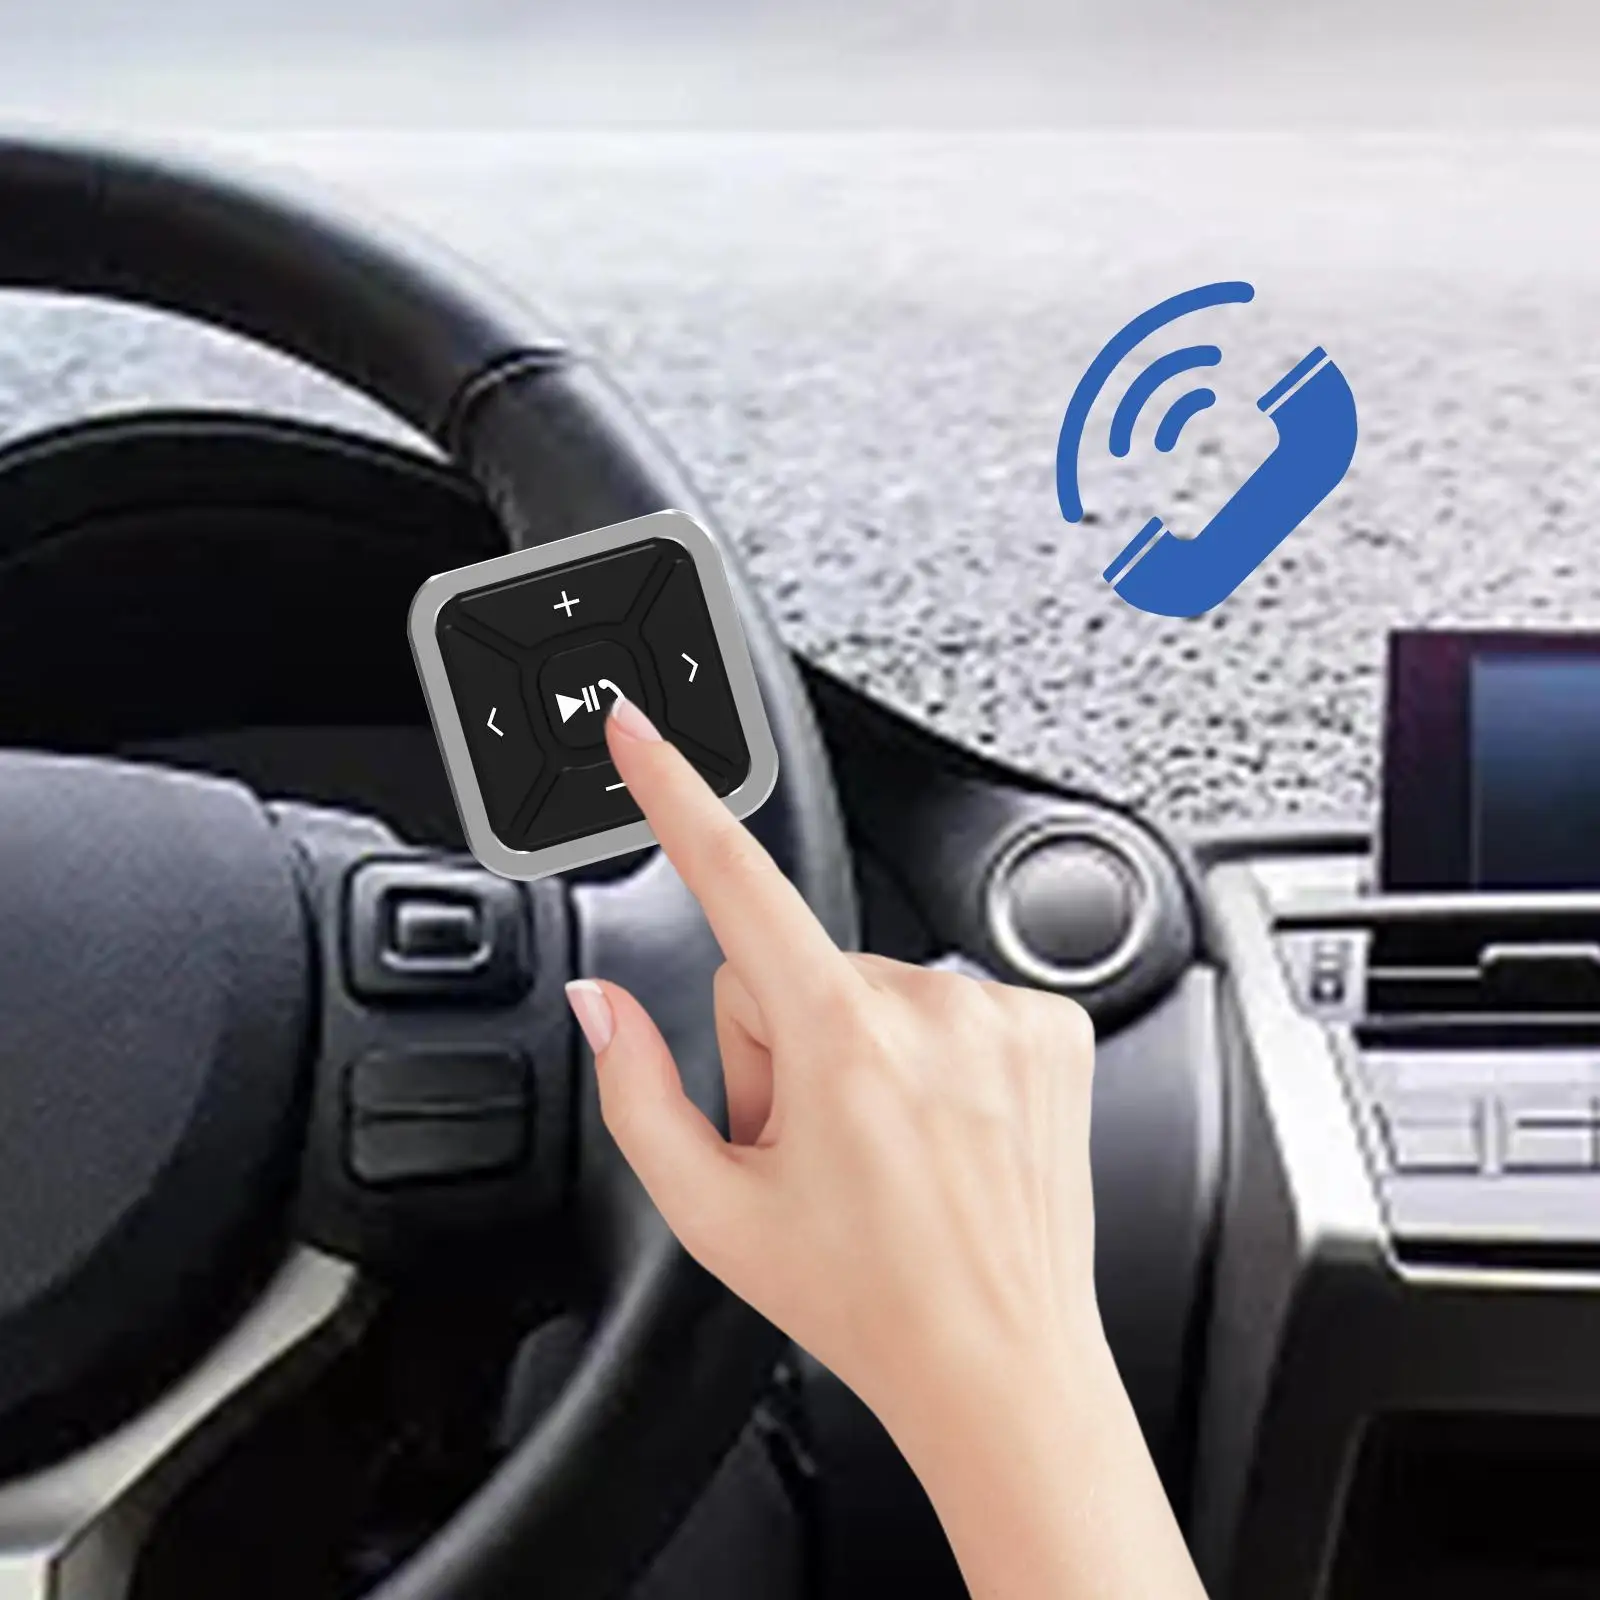 Wireless Bluetooth 5.0 Media Remote Control Button Car Steering Wheel Mount